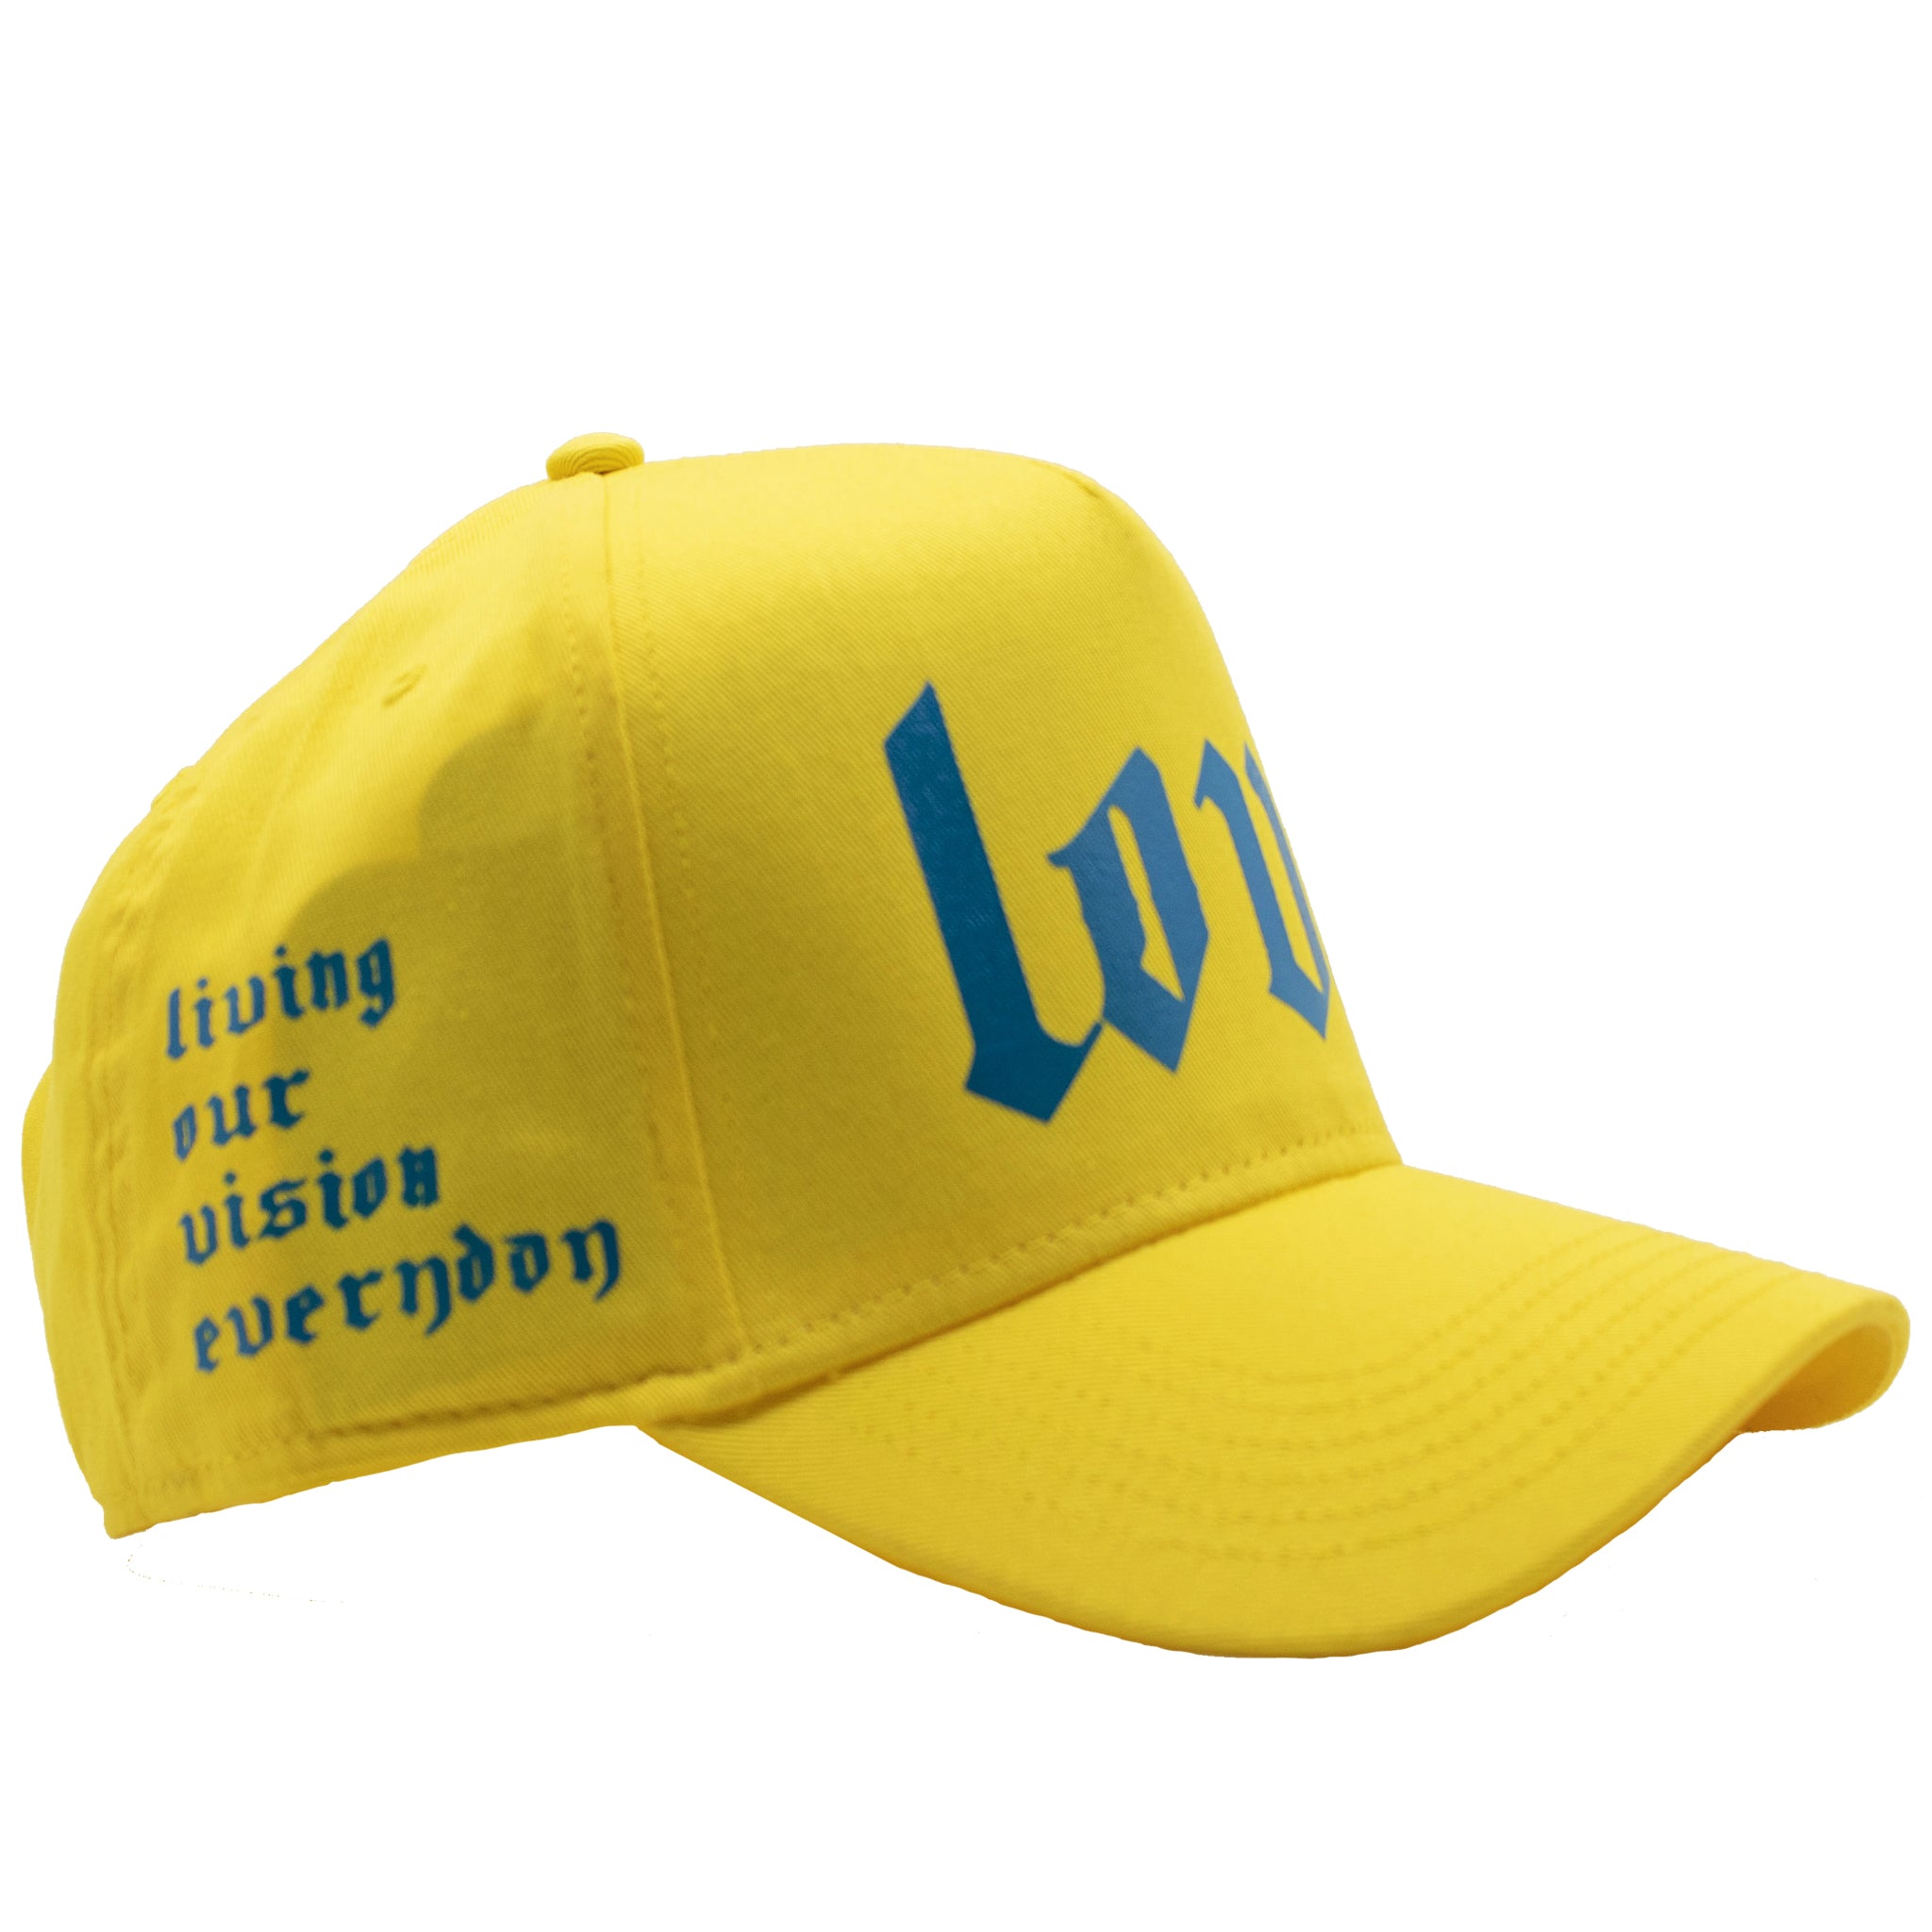 LOVE Yellow Trucker Hat